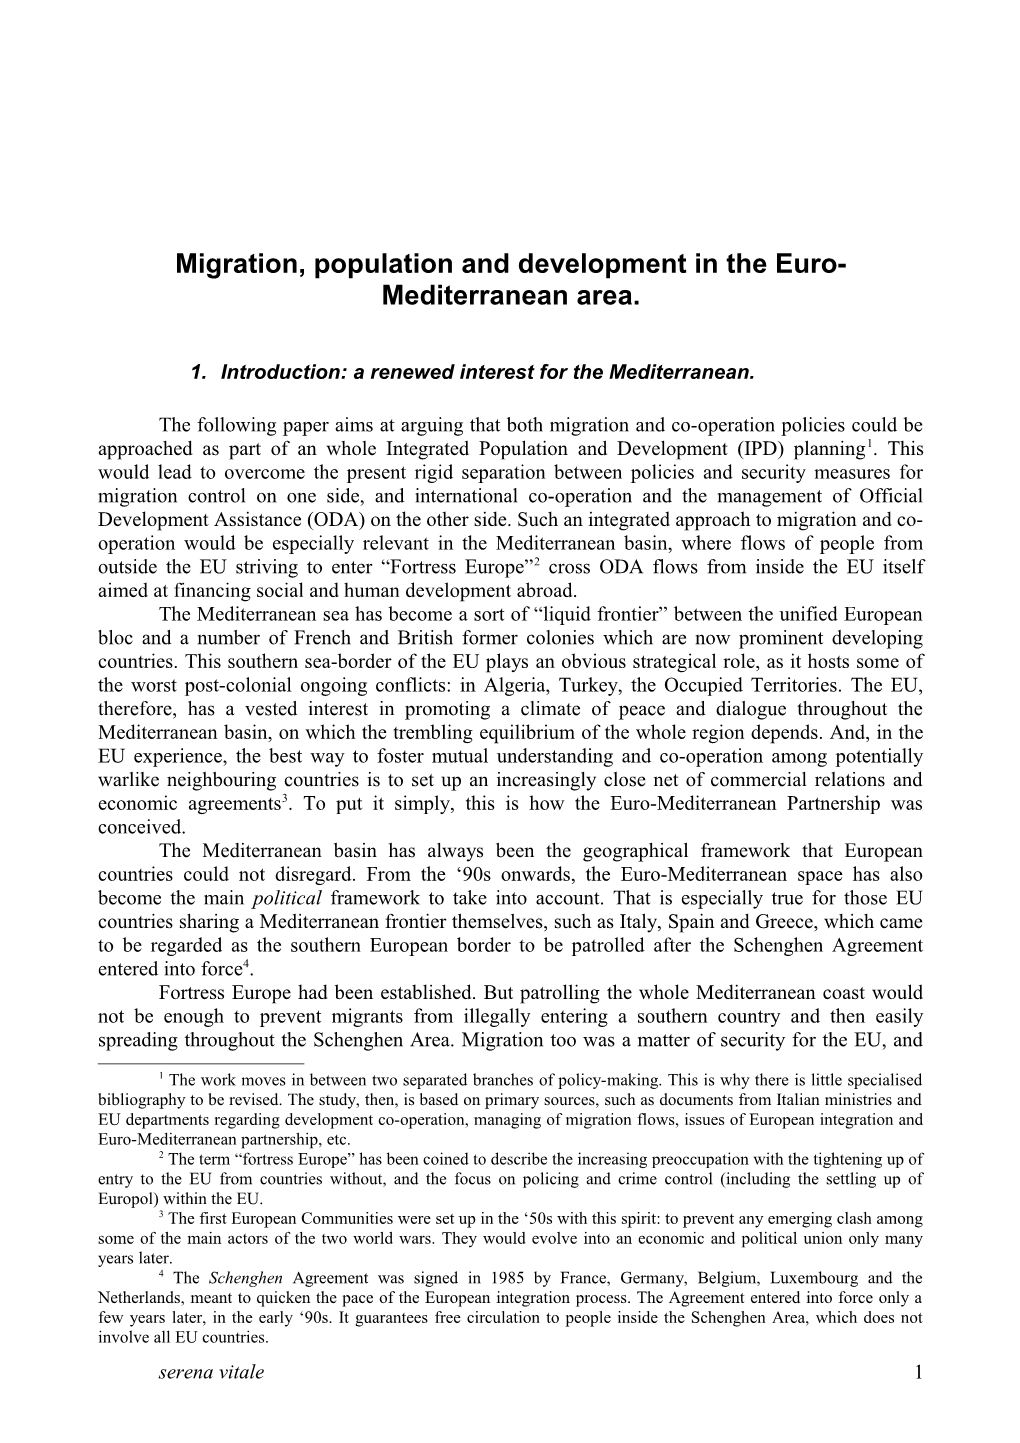 Migration, Population and Development in the Mediterranean Area